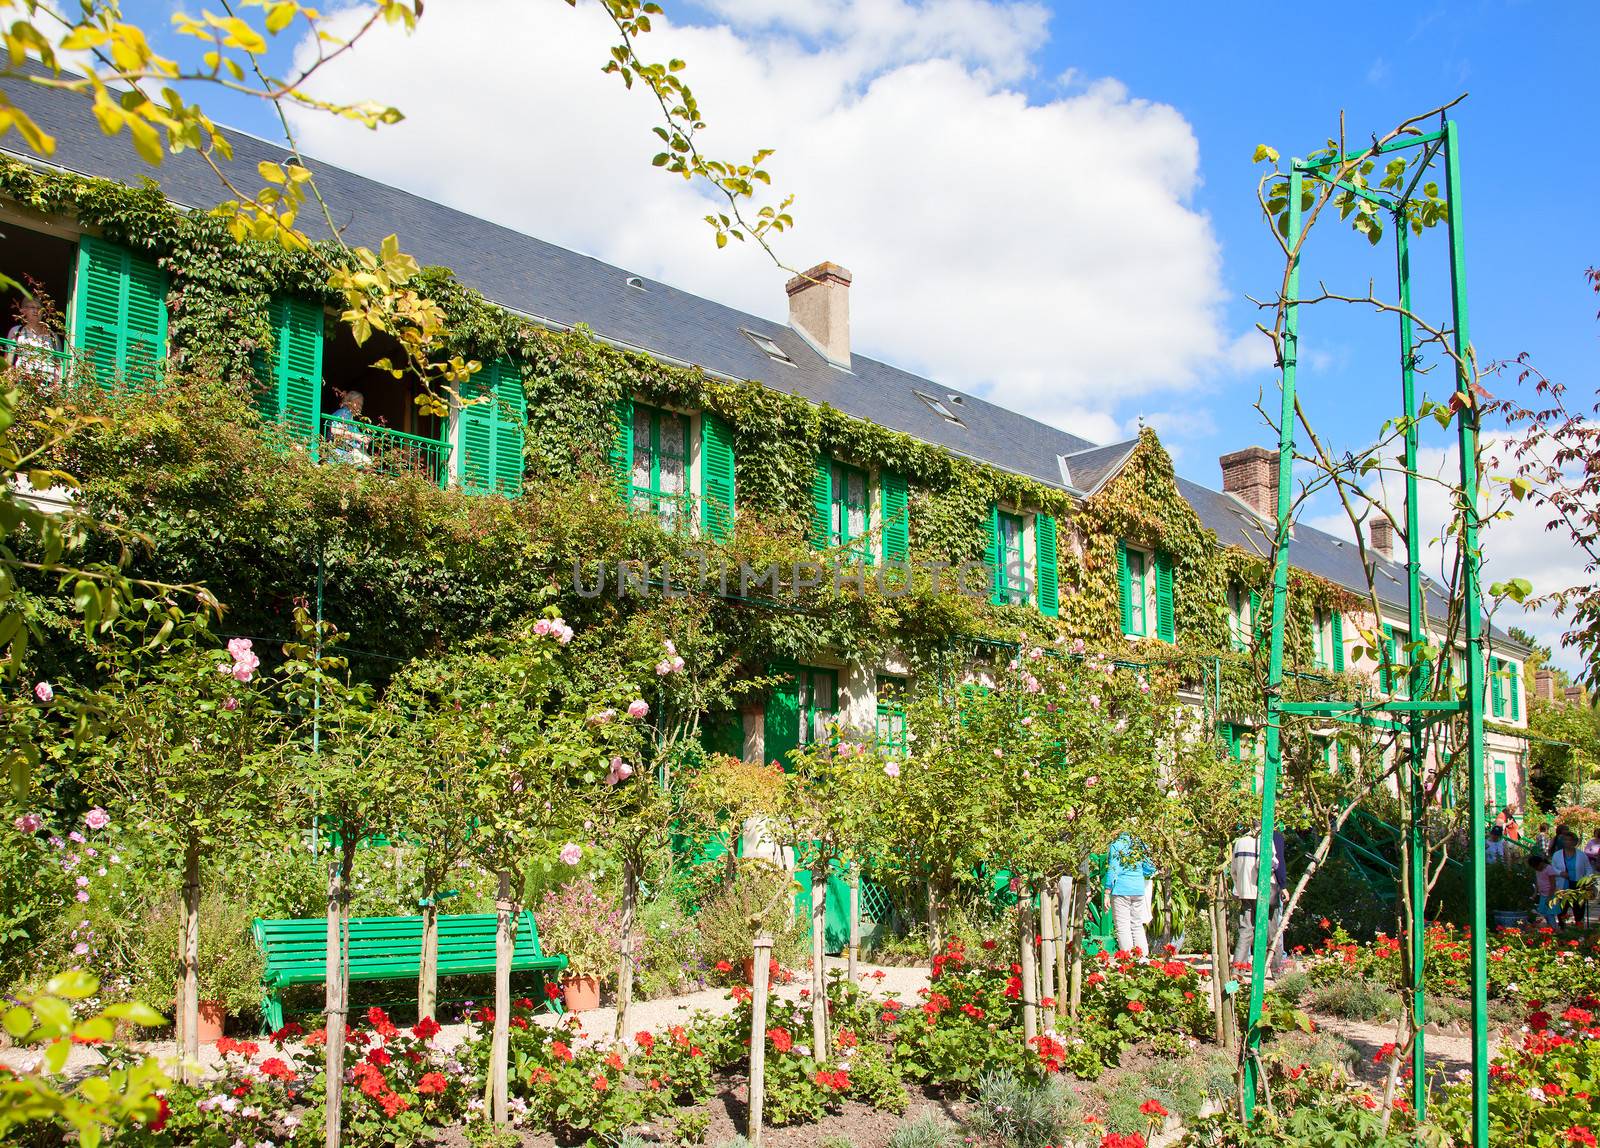 Claude Monet garden and house near Paris France